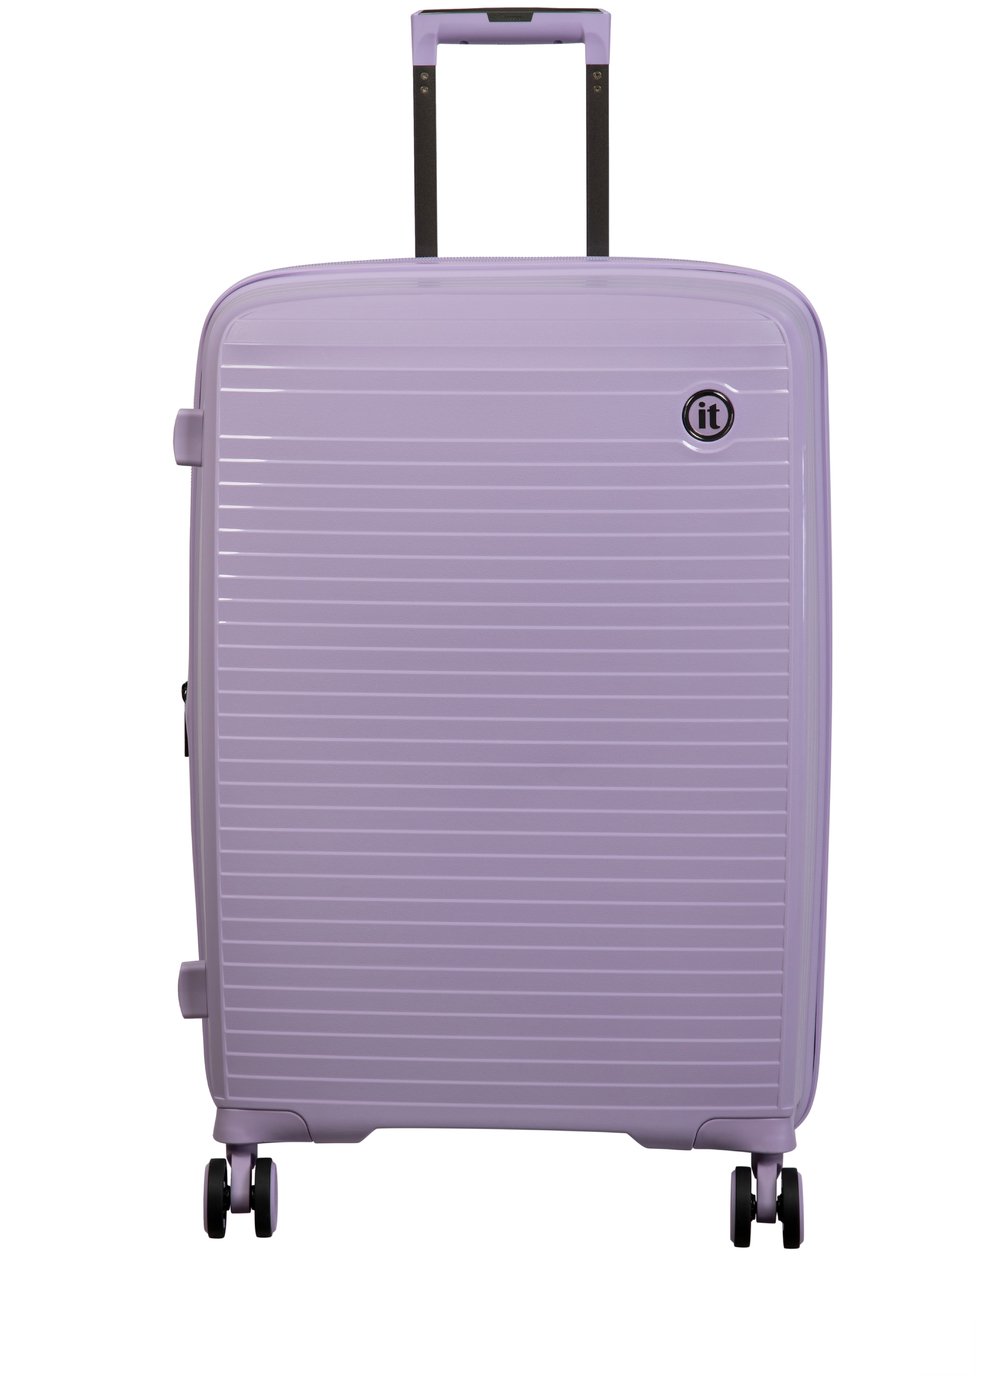 IT Hard Large Light Weight Expandable 8 Wheel Suitcase-Lilac